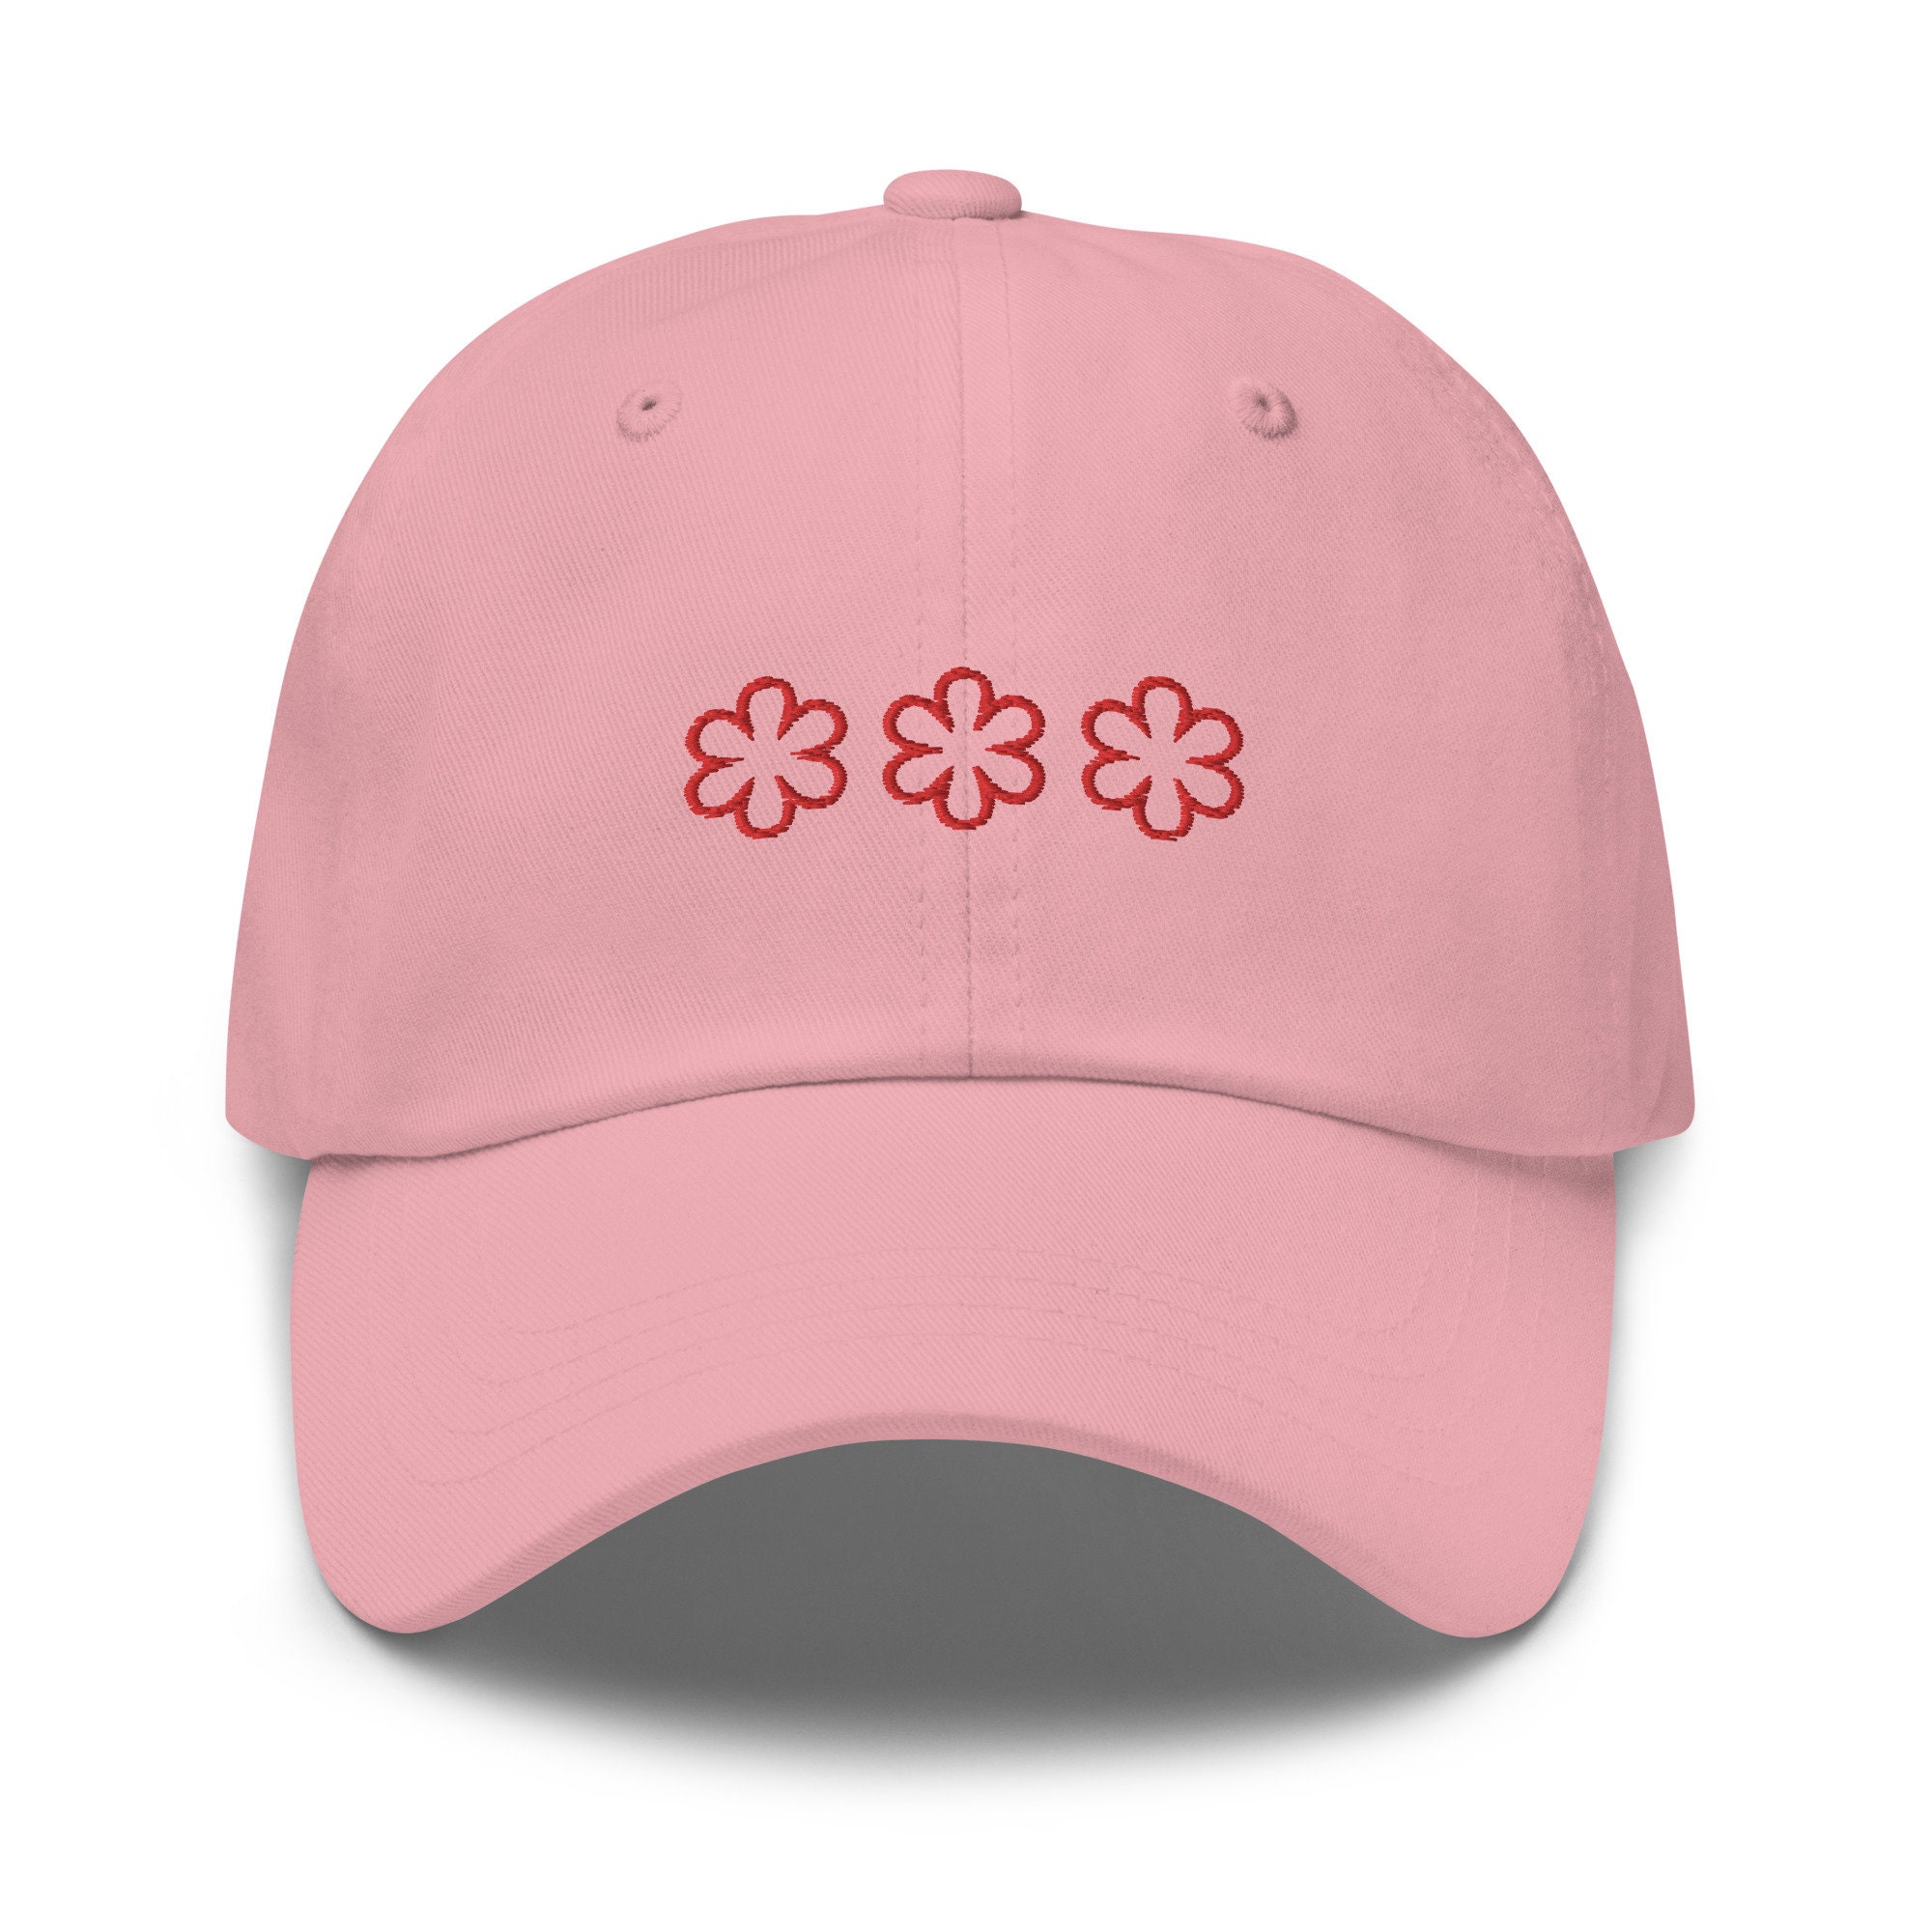 3 Michelin Star Inspired Dad Hat - Gift for Foodies & Restauranteurs - Minimalist Embroidered Cotton Hat